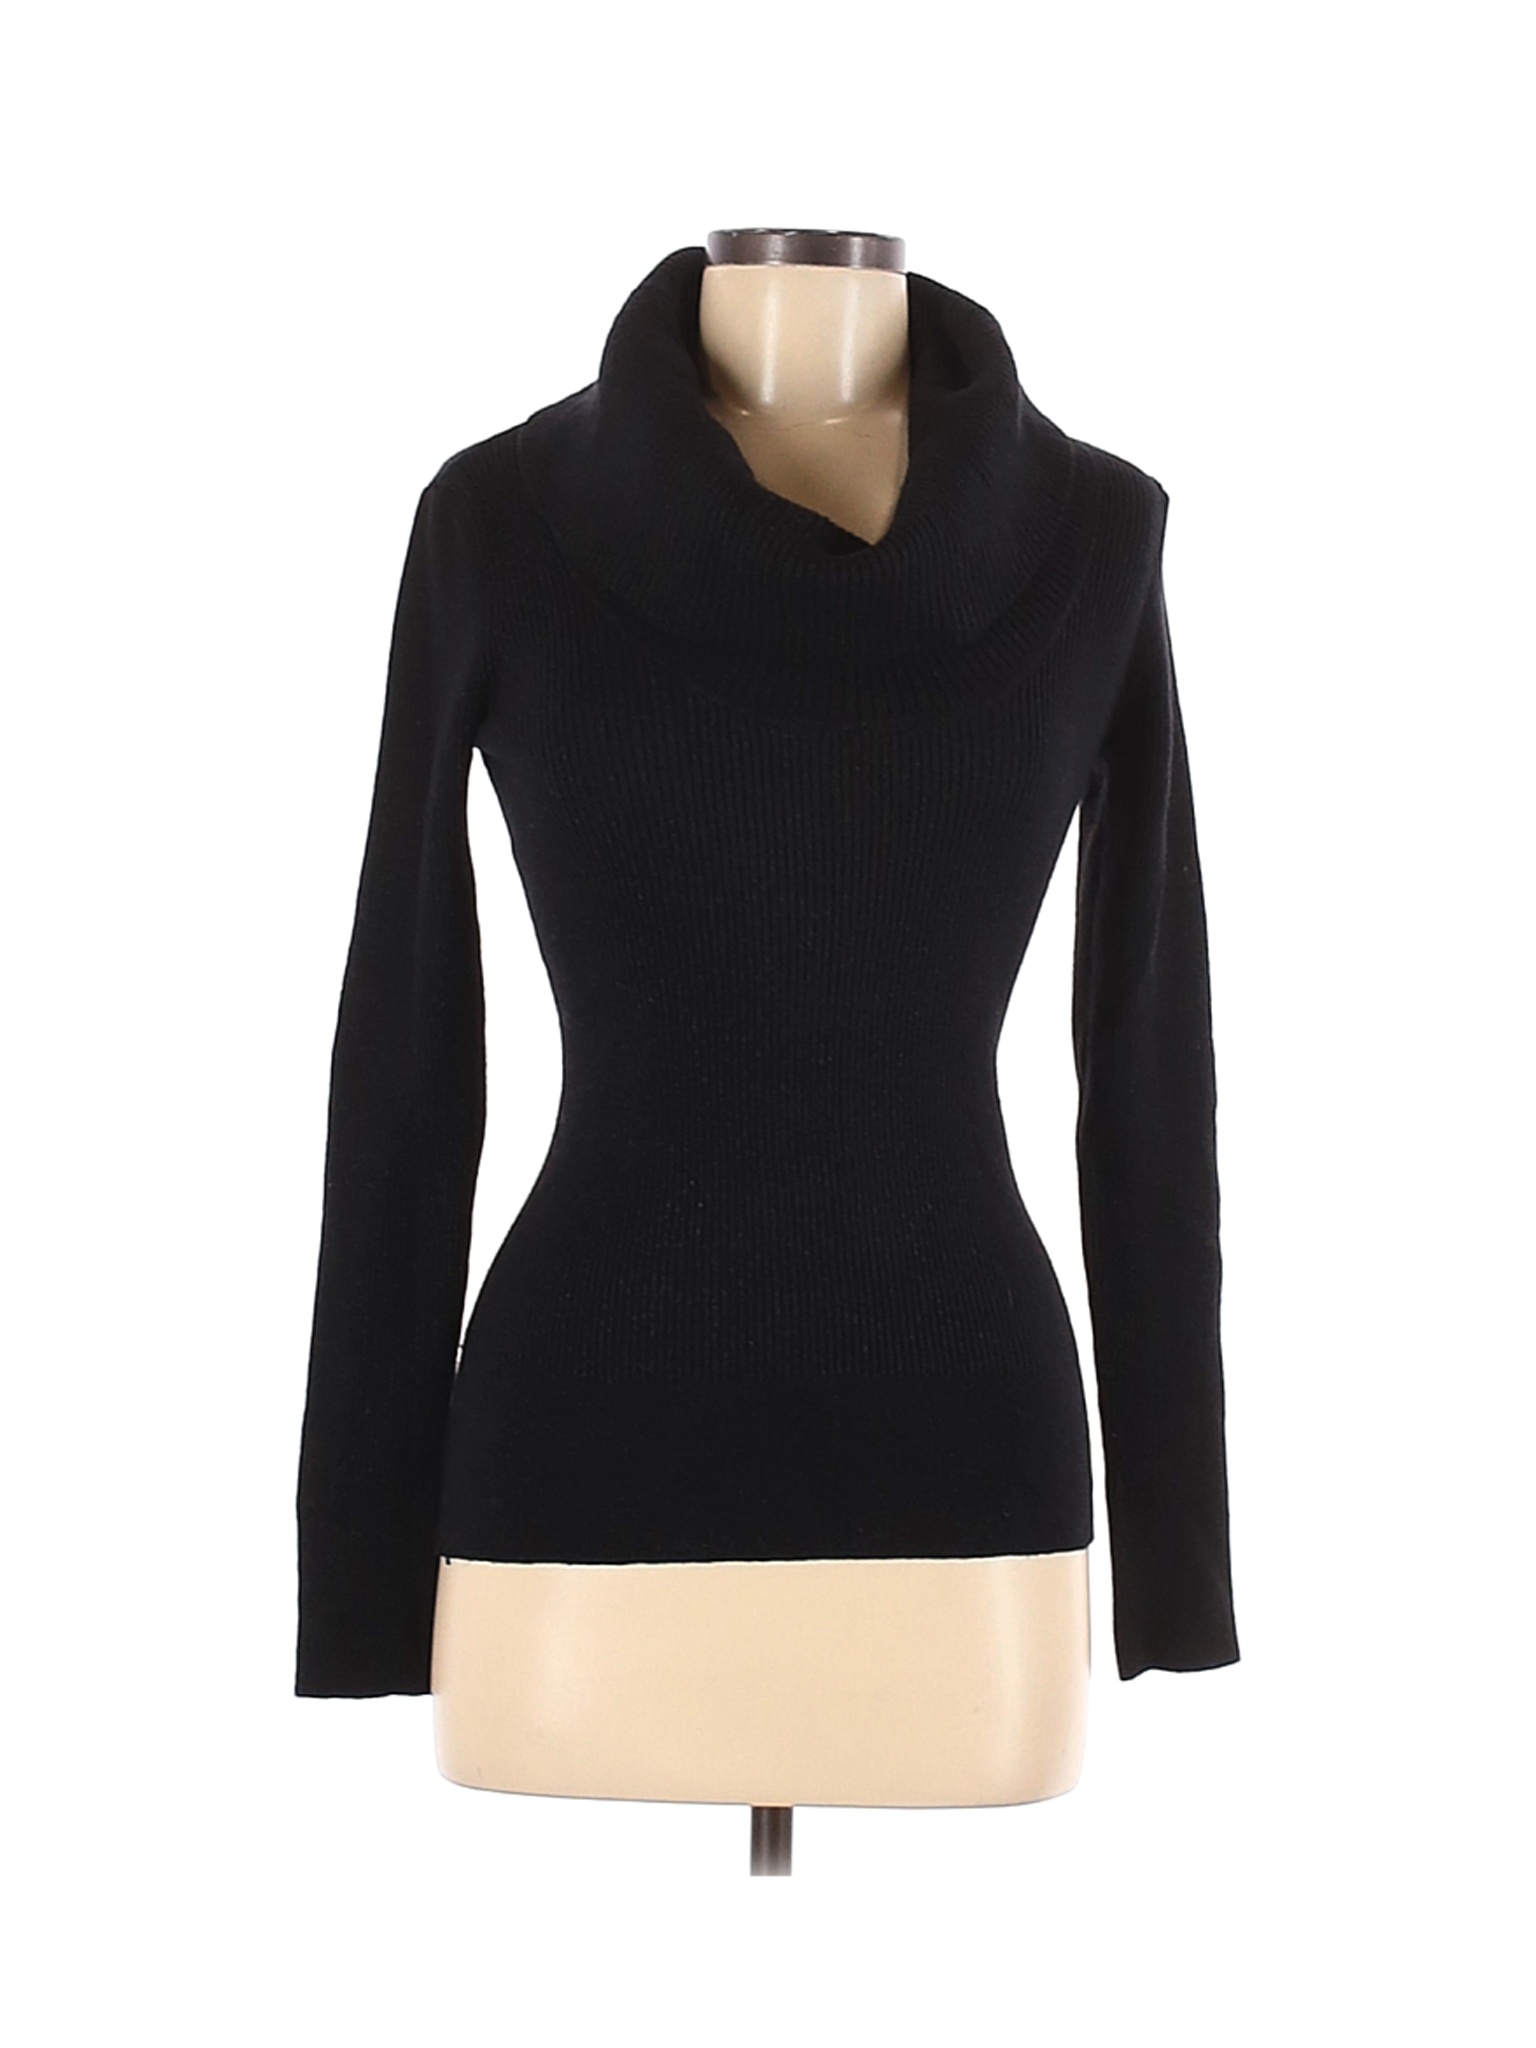 White House Black Market Women Black Turtleneck Sweater M | eBay